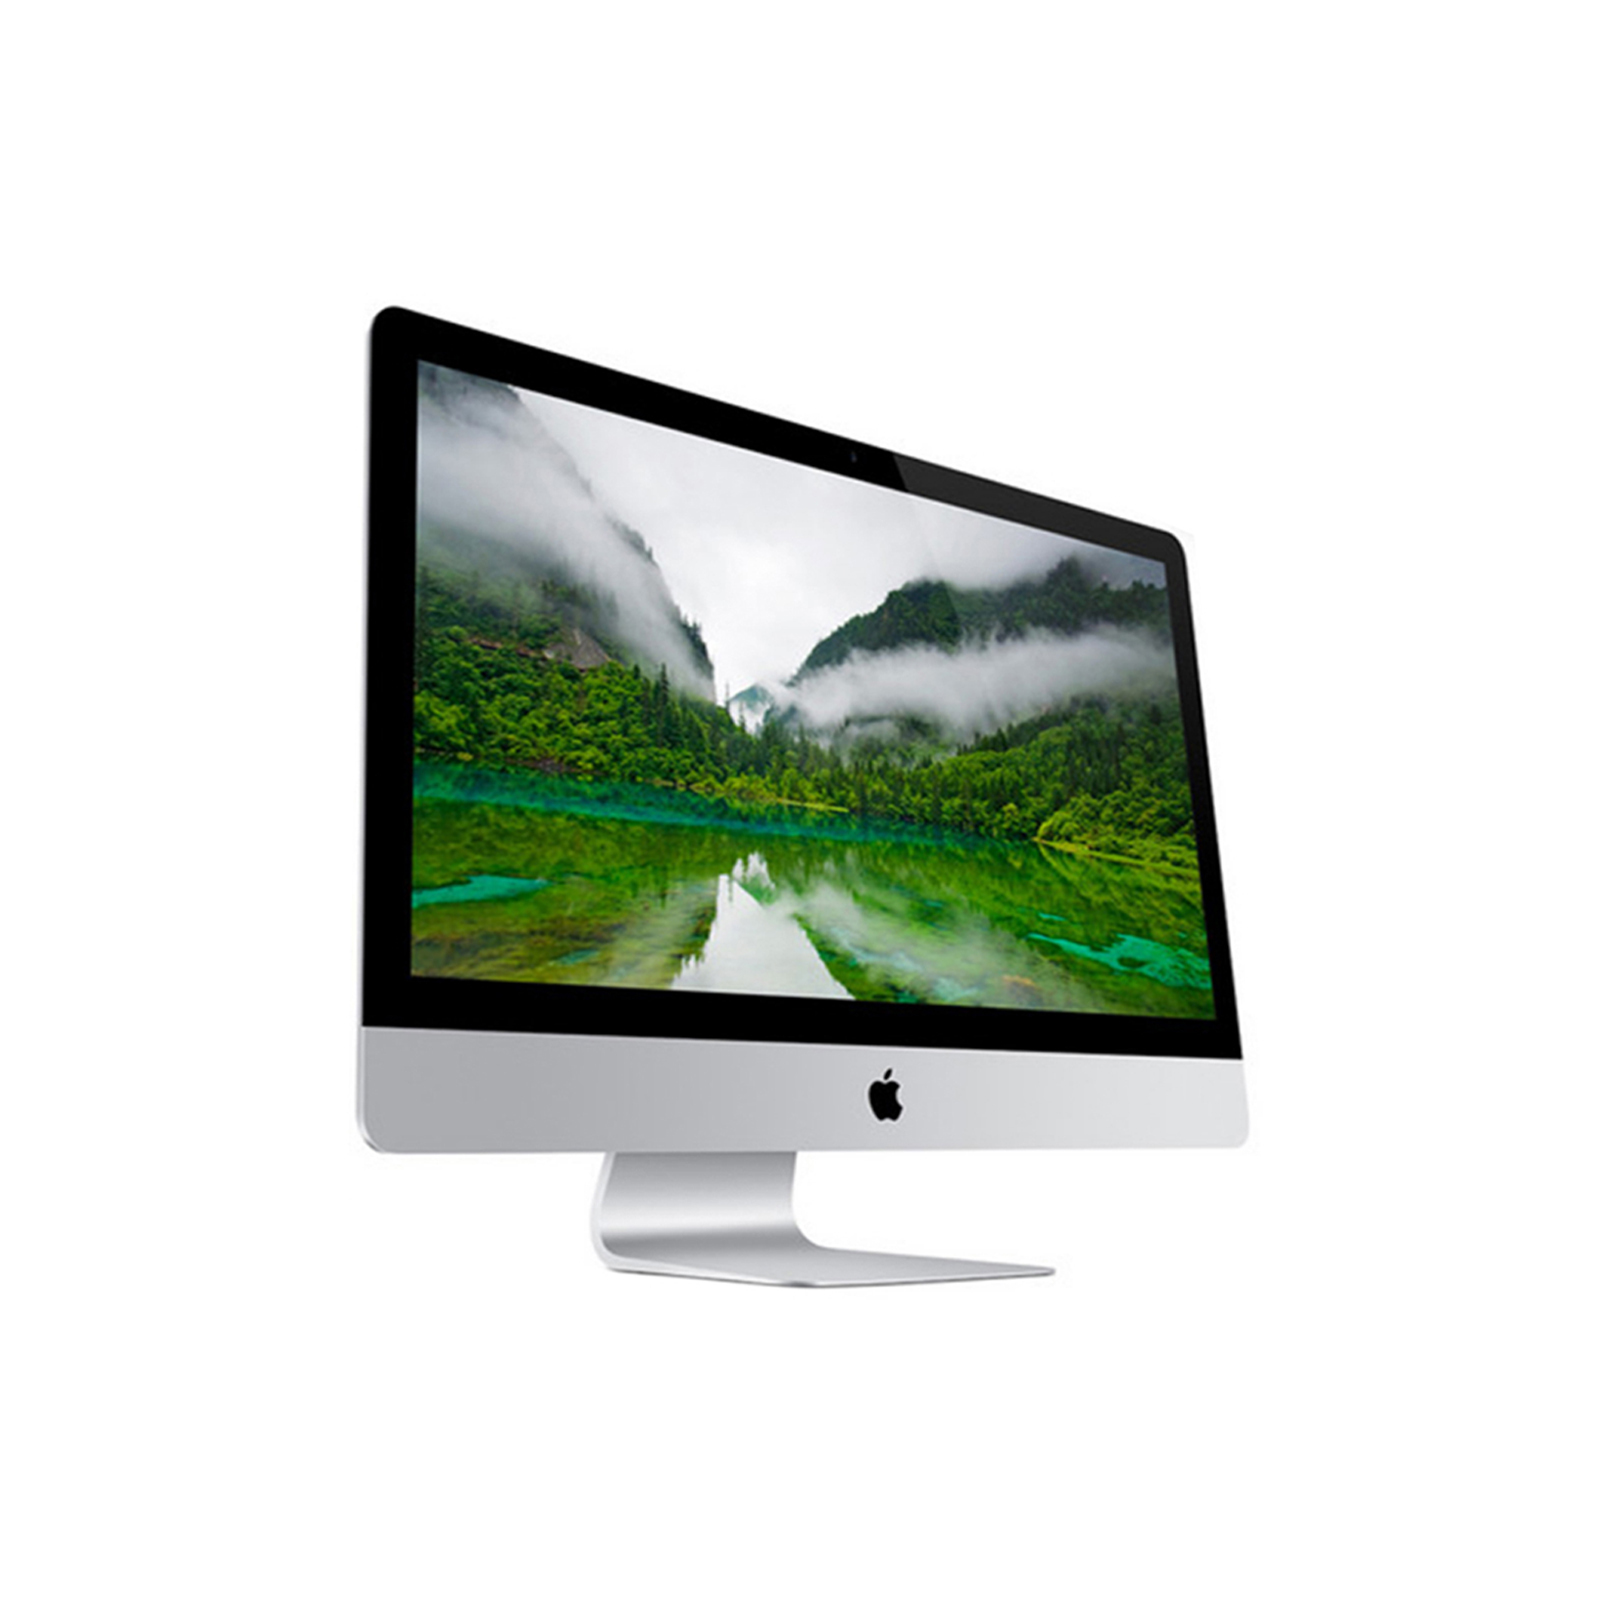 iMac 27" Late 2013 - Core i5 3.2Ghz / 16GB RAM / 1TB HDD / GT 775M GPU 